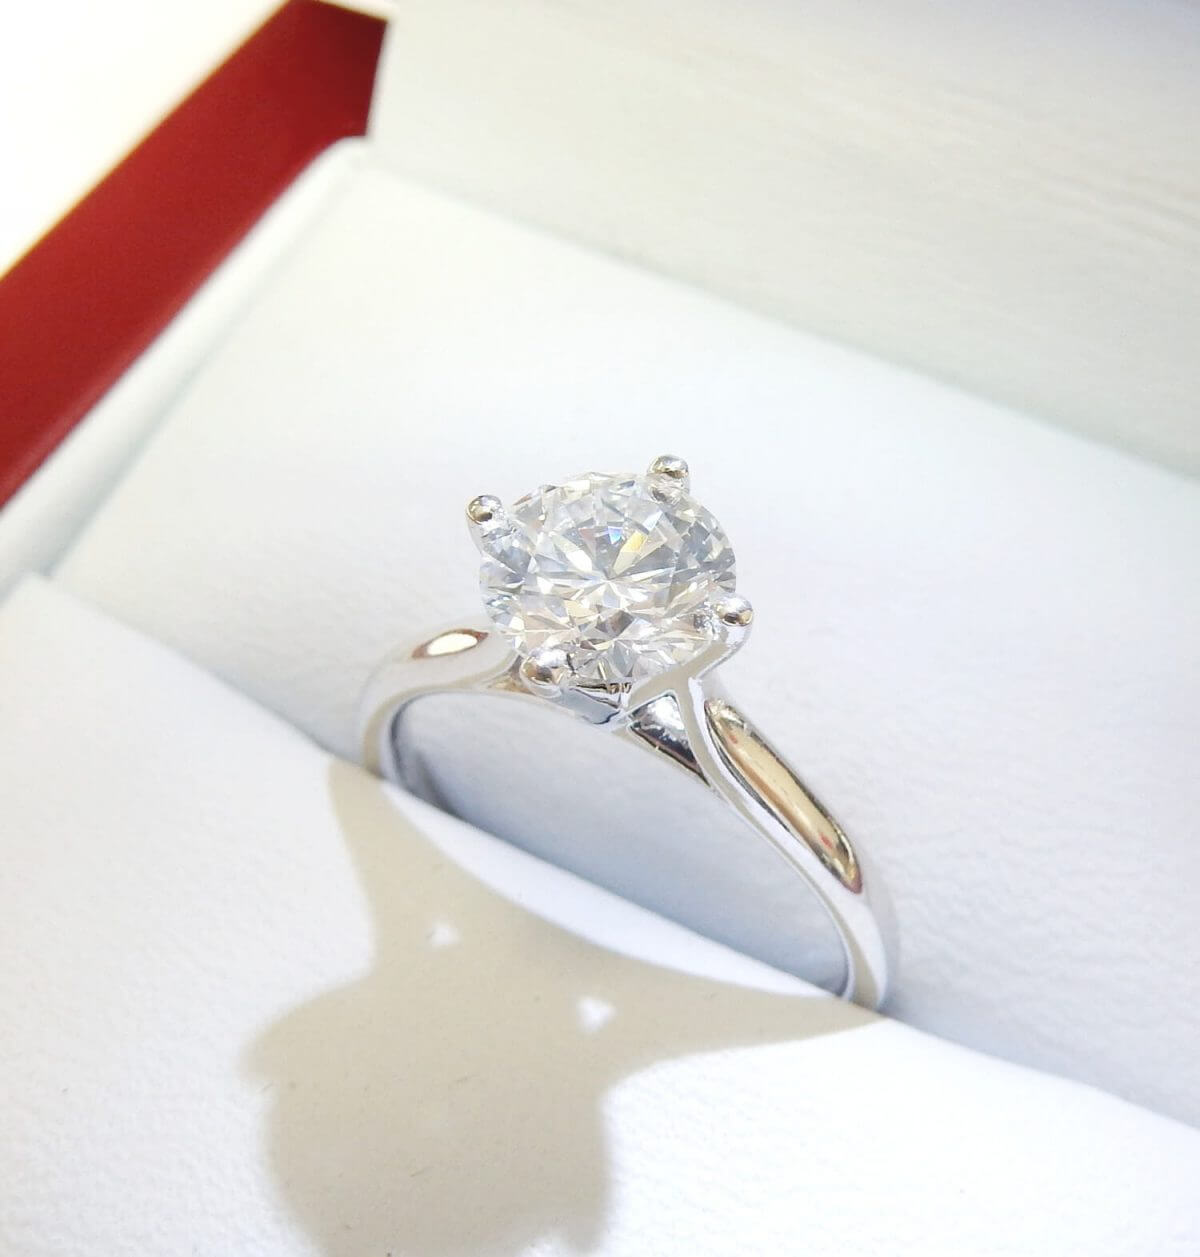 North south diamond engagement ring